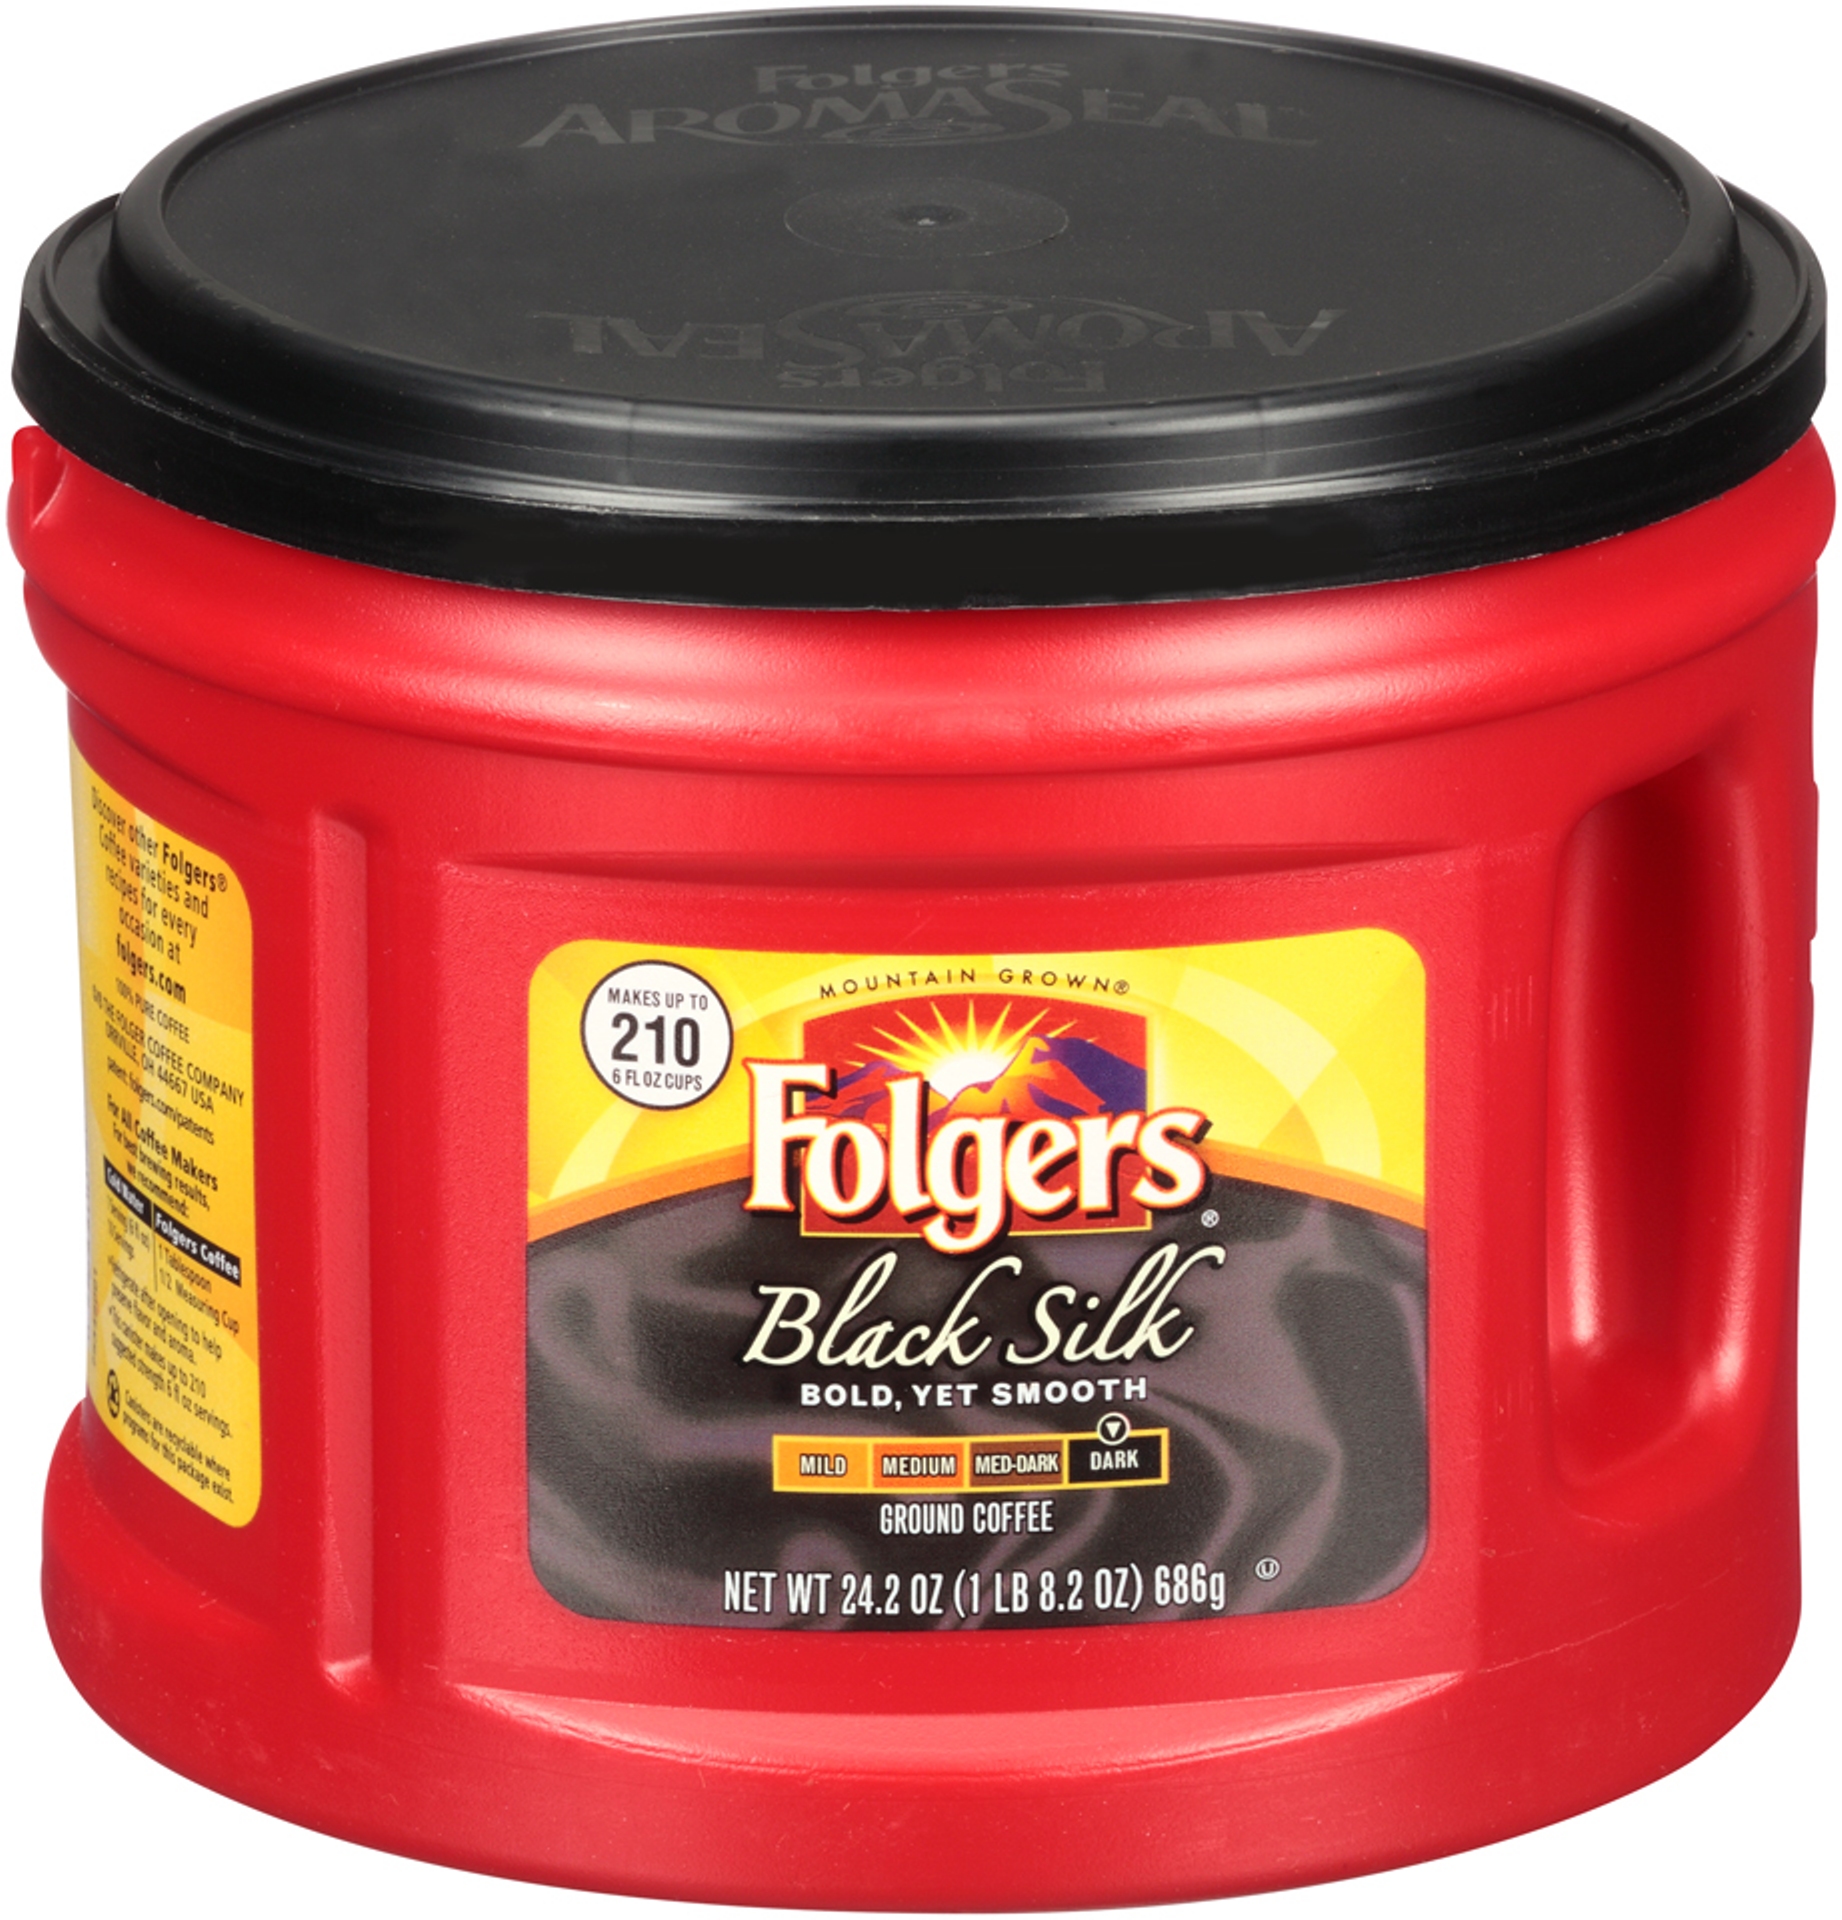 Folgers Black Silk Ground Coffee, 24.2 oz.